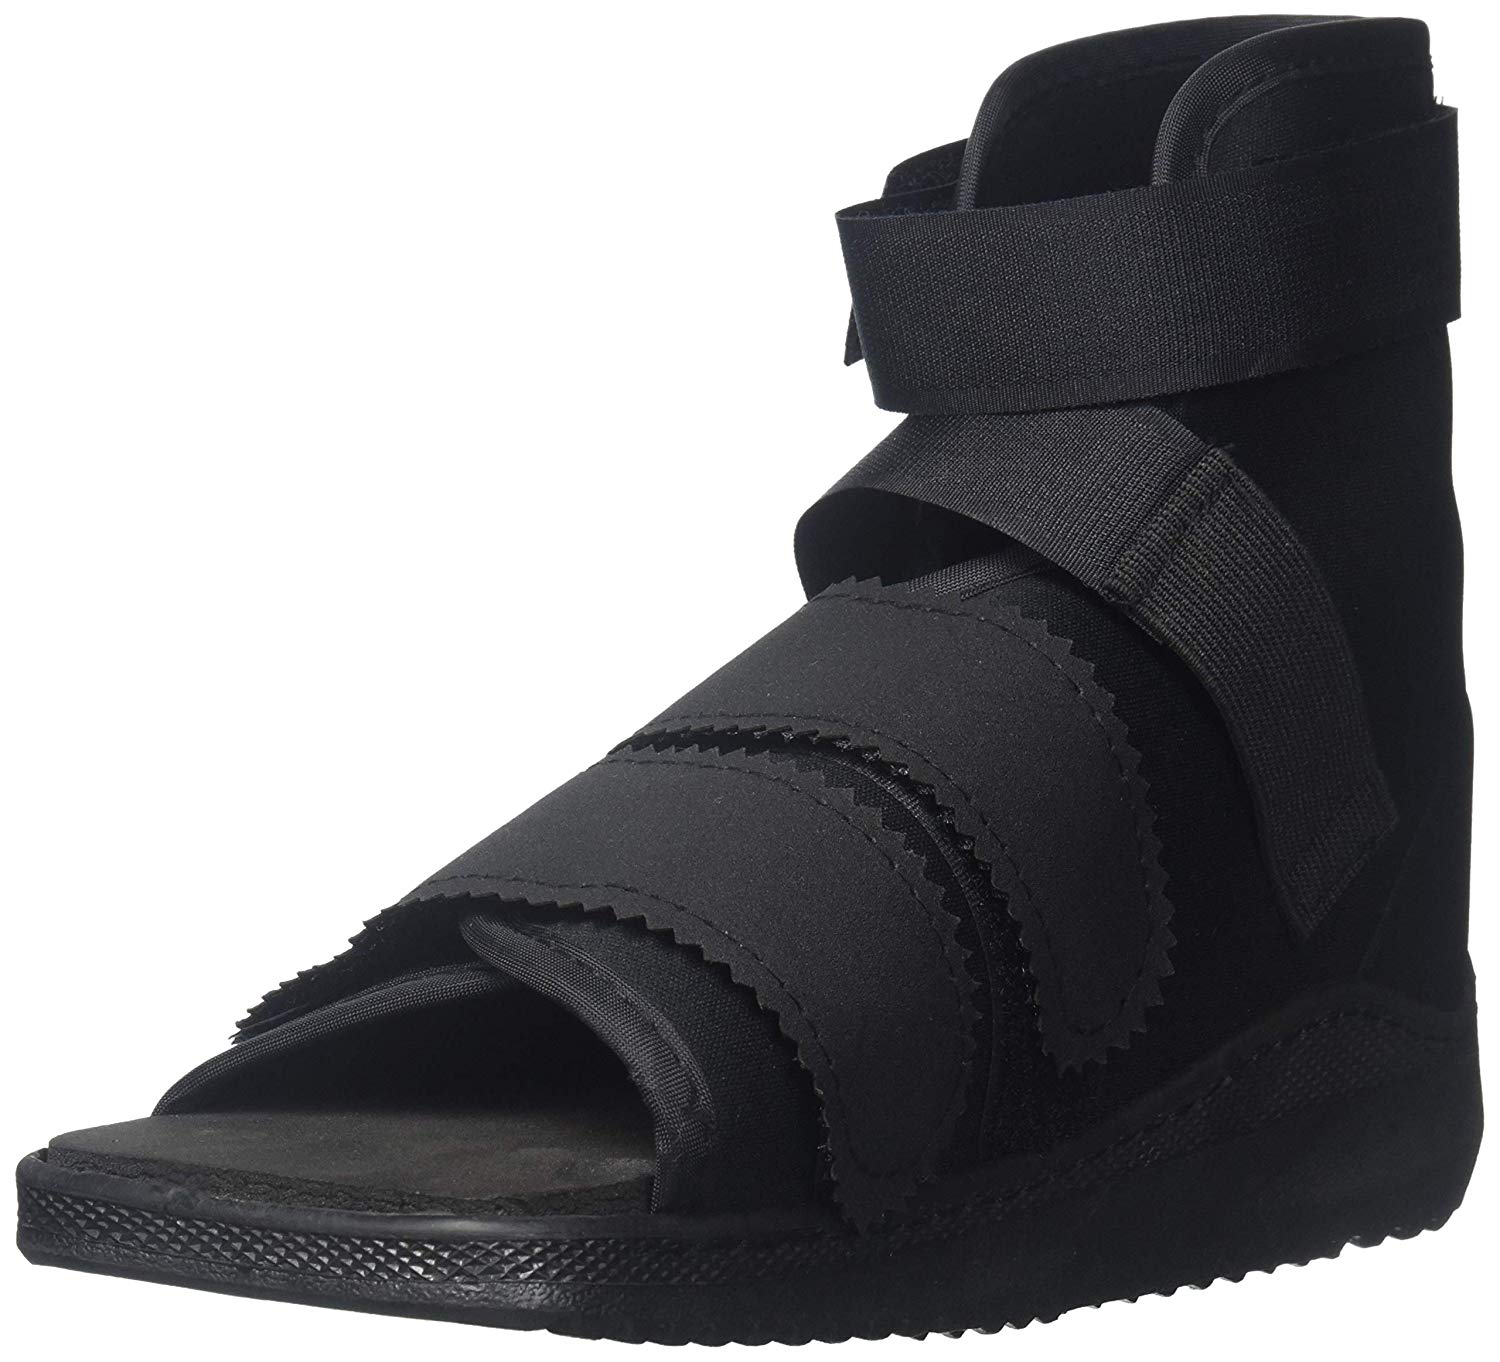 Darco SlimLine cast boot, black (adult extra-small) 609271849051 | eBay